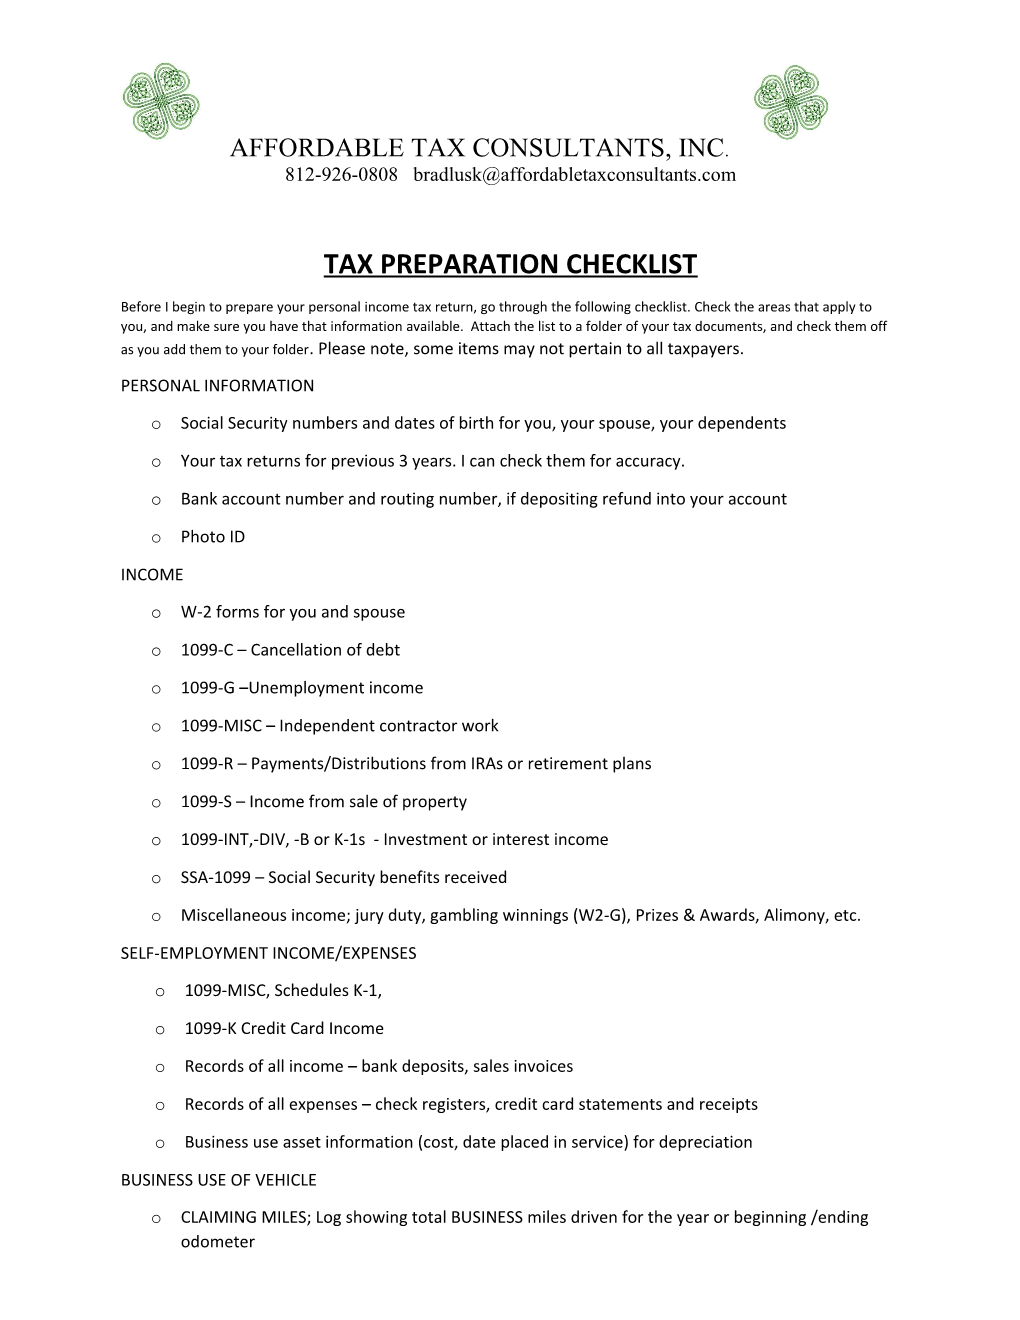 Tax Preparation Checklist